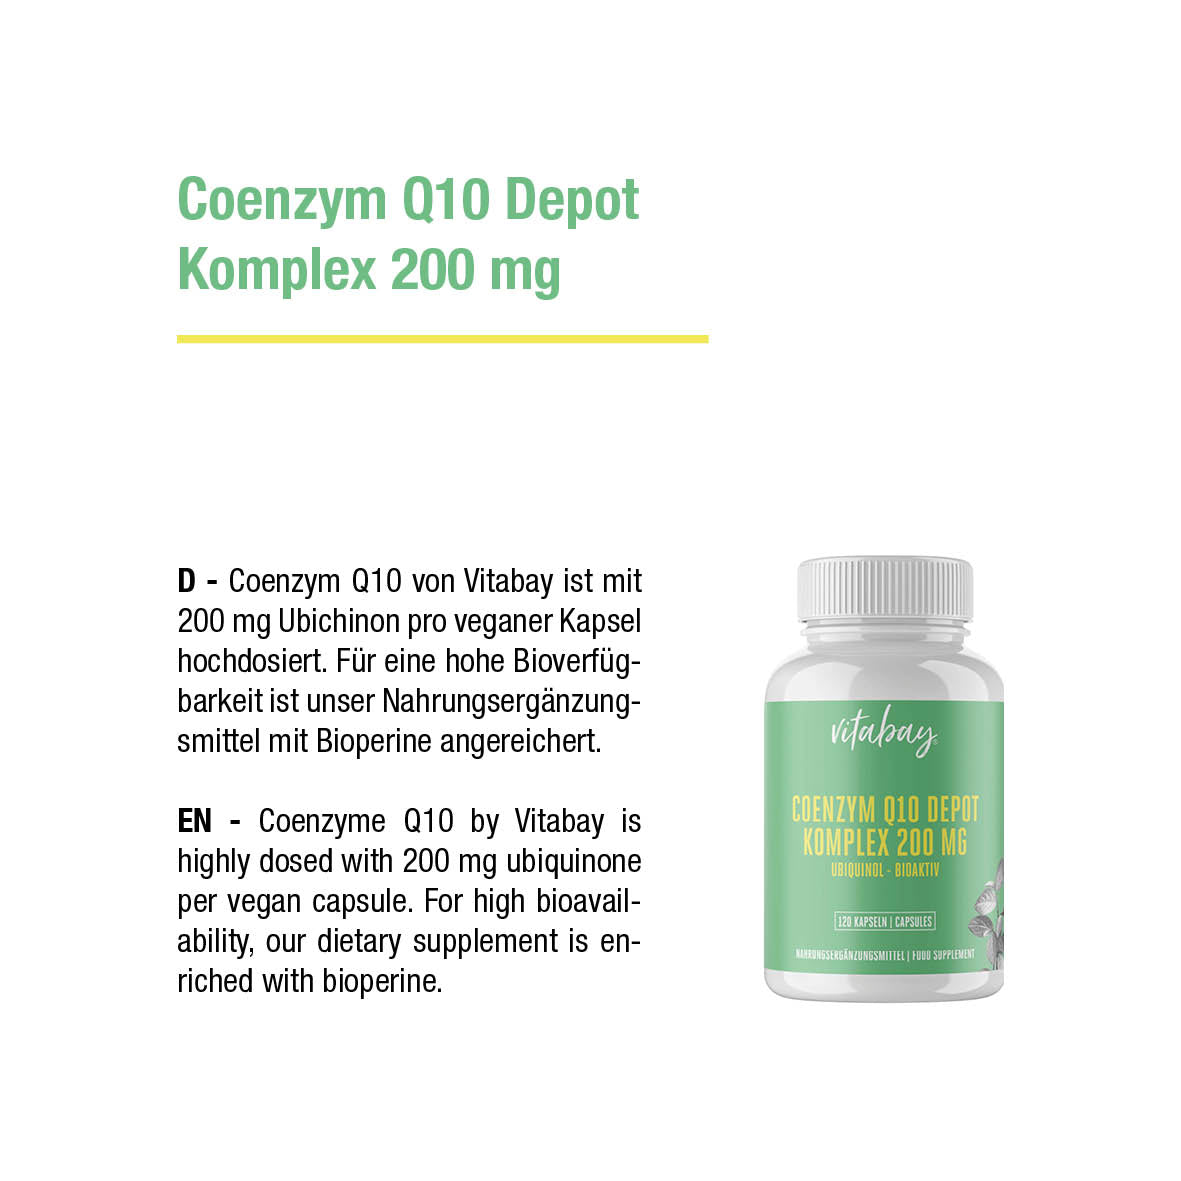 Coenzym Q10 Depot Komplex 200 mg - 120 vegane Kapseln